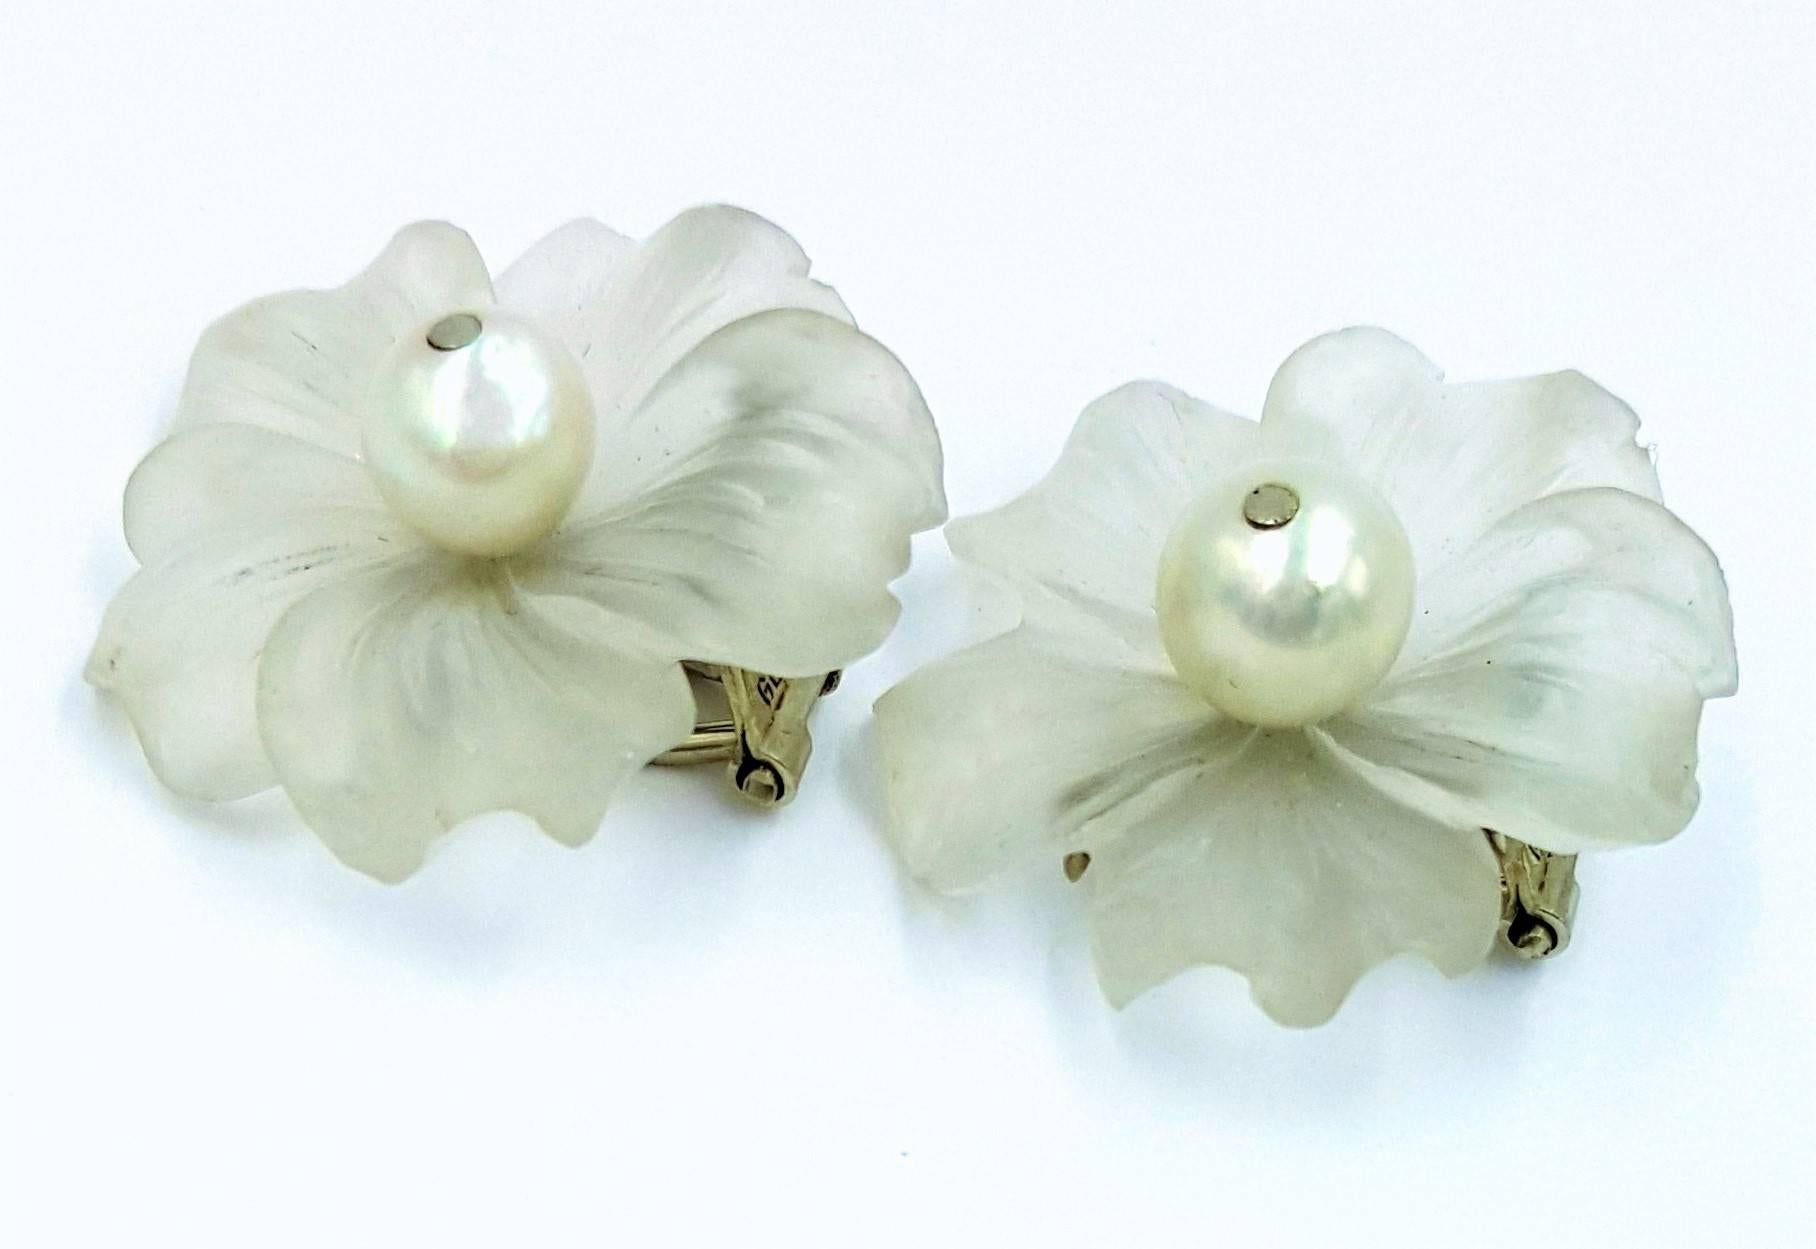 Gesch Art Deco Austria Carved Rock Crystal Pearl Set in 14K White Gold Earrings 1